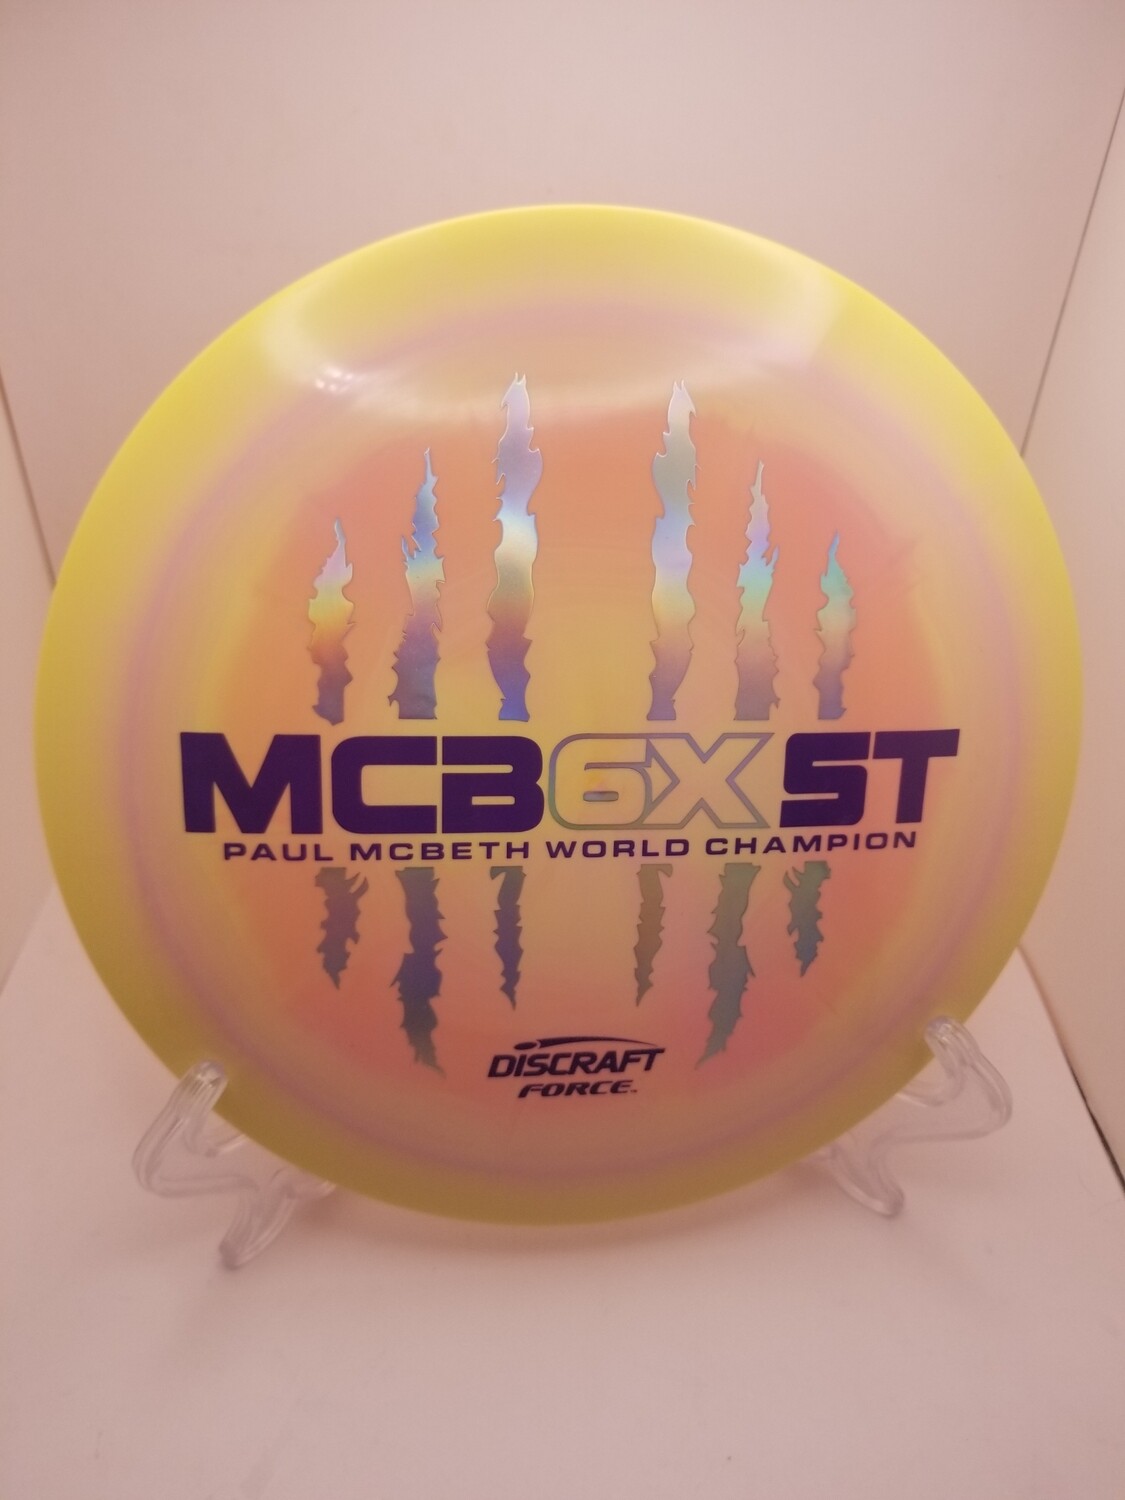 Discraft Discs Paul McBeth 6x ESP Force – 6 Claw MCB6XST Pink/Yellow Blend 173-174g